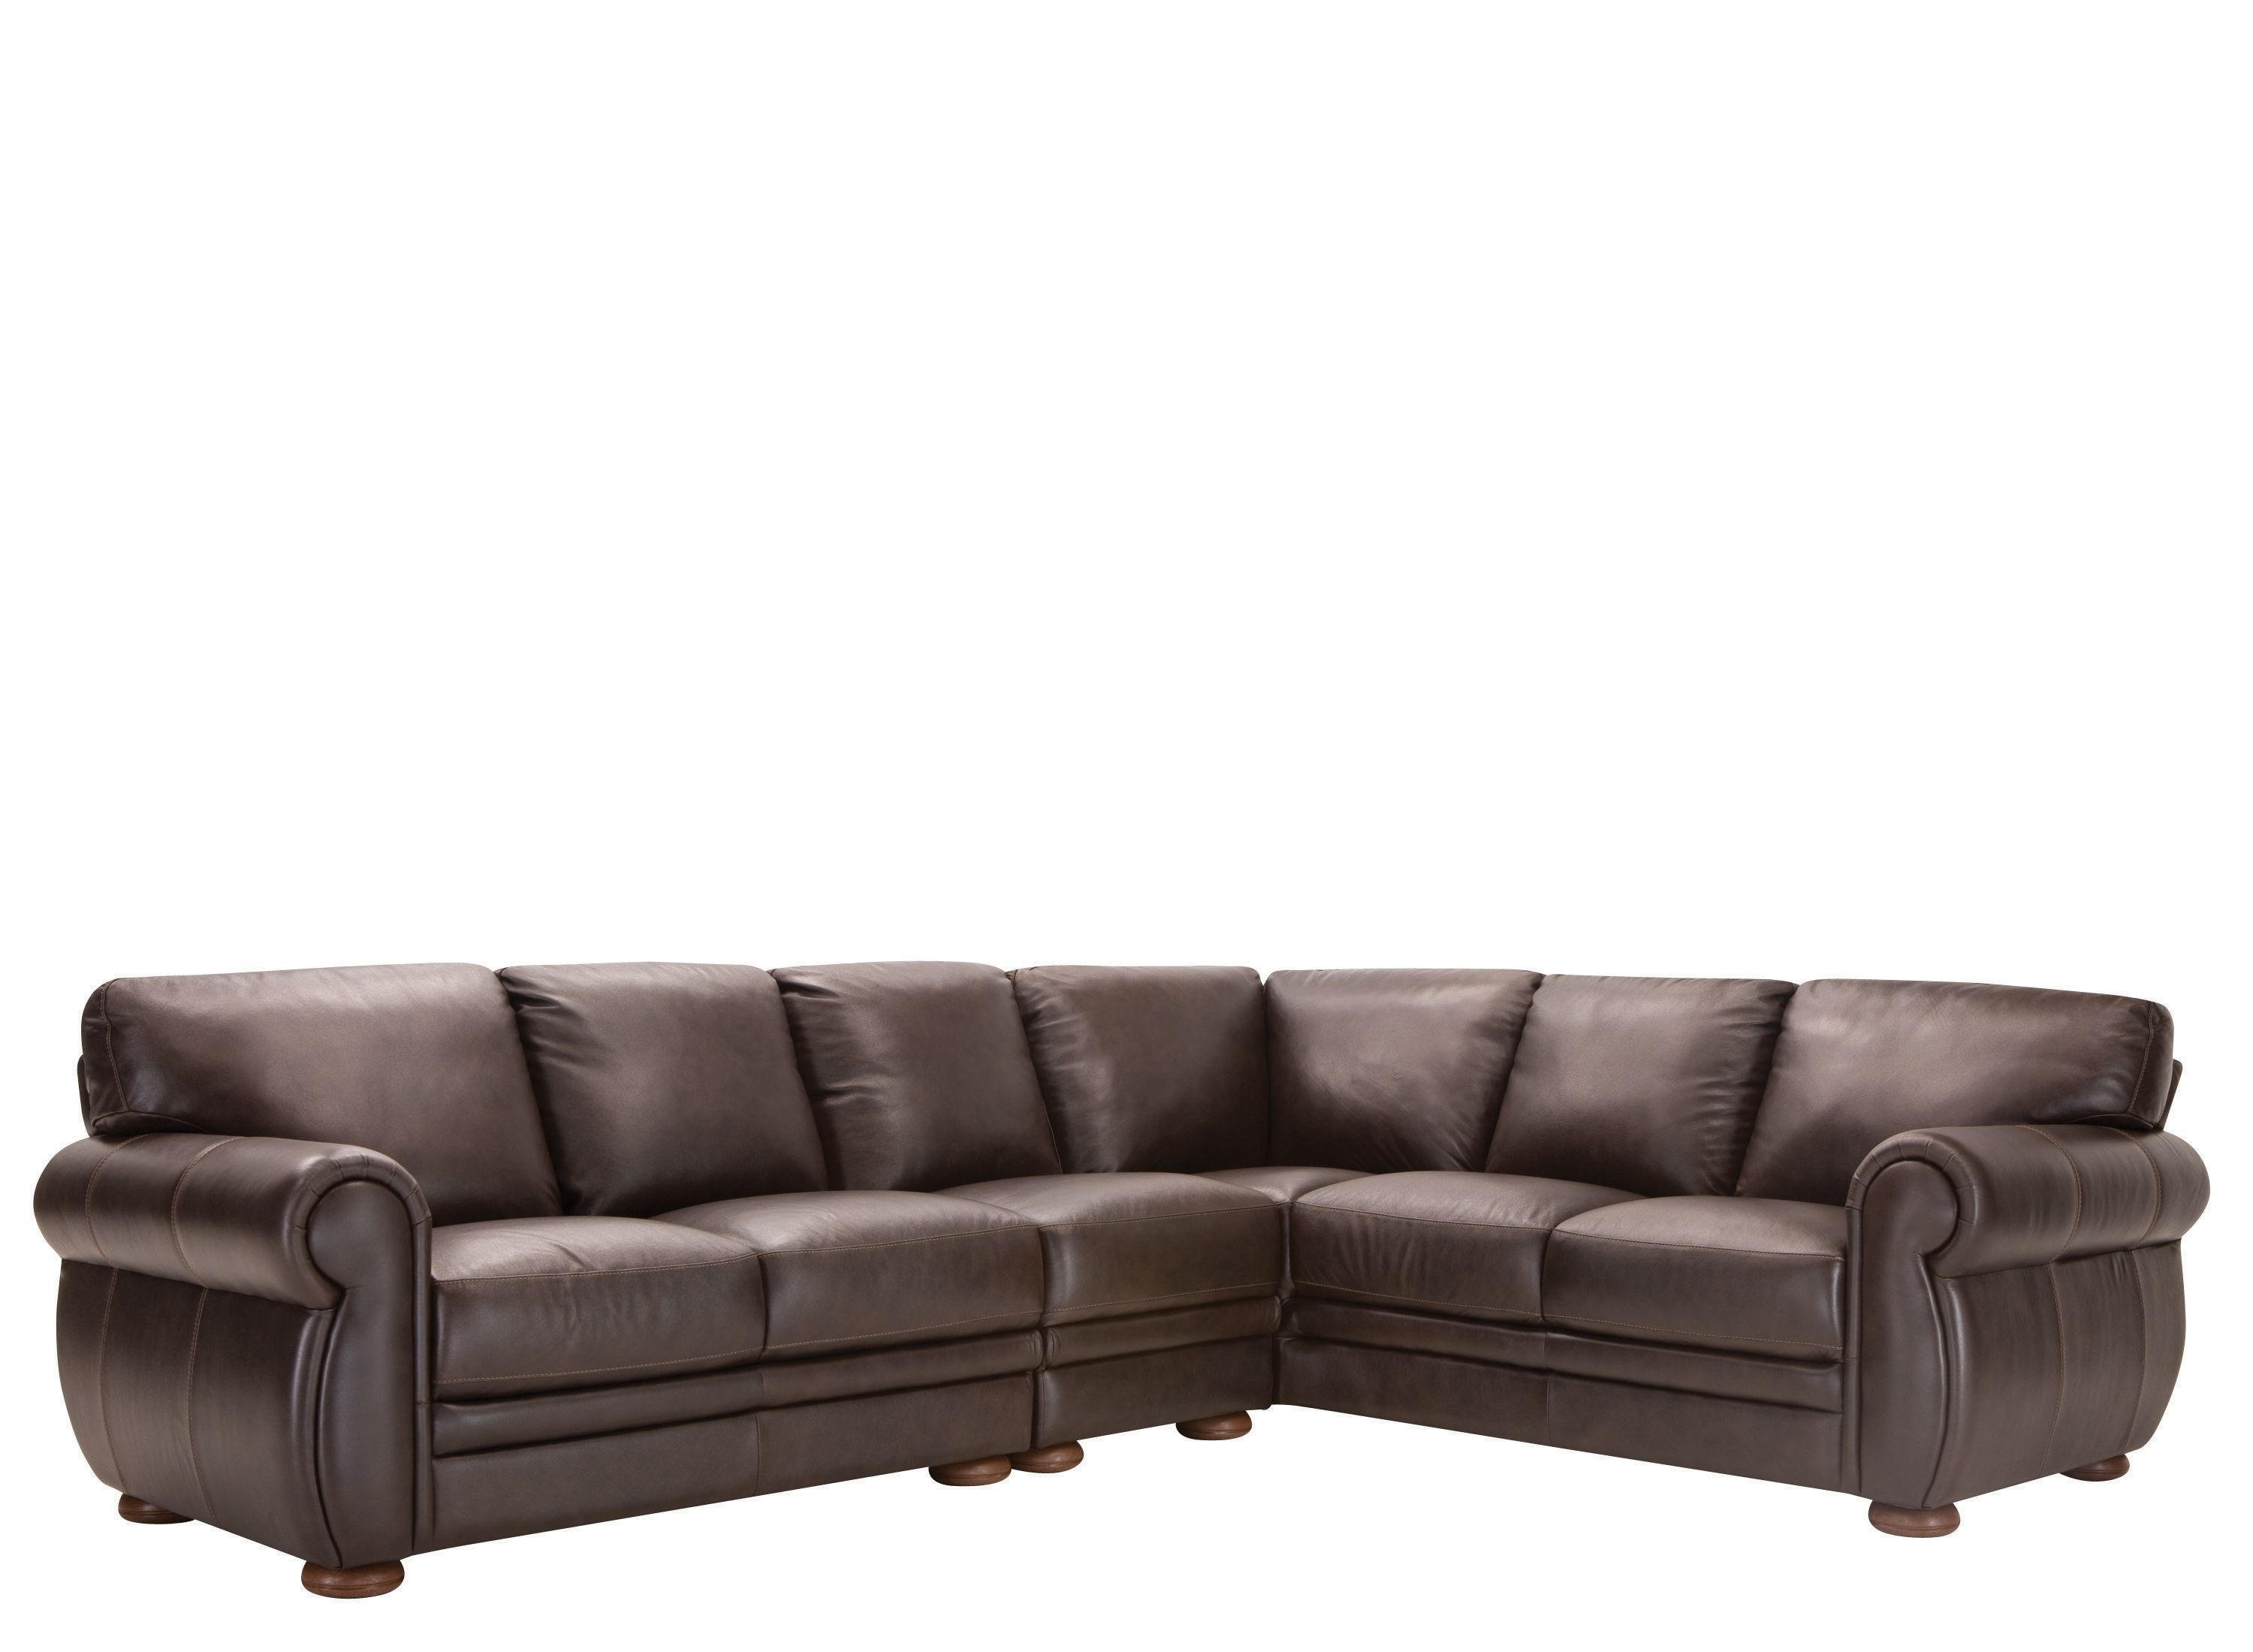 Marsala 3 Pc Leather Sectional Sofa, Raymond And Flanigan Sectional Sofas